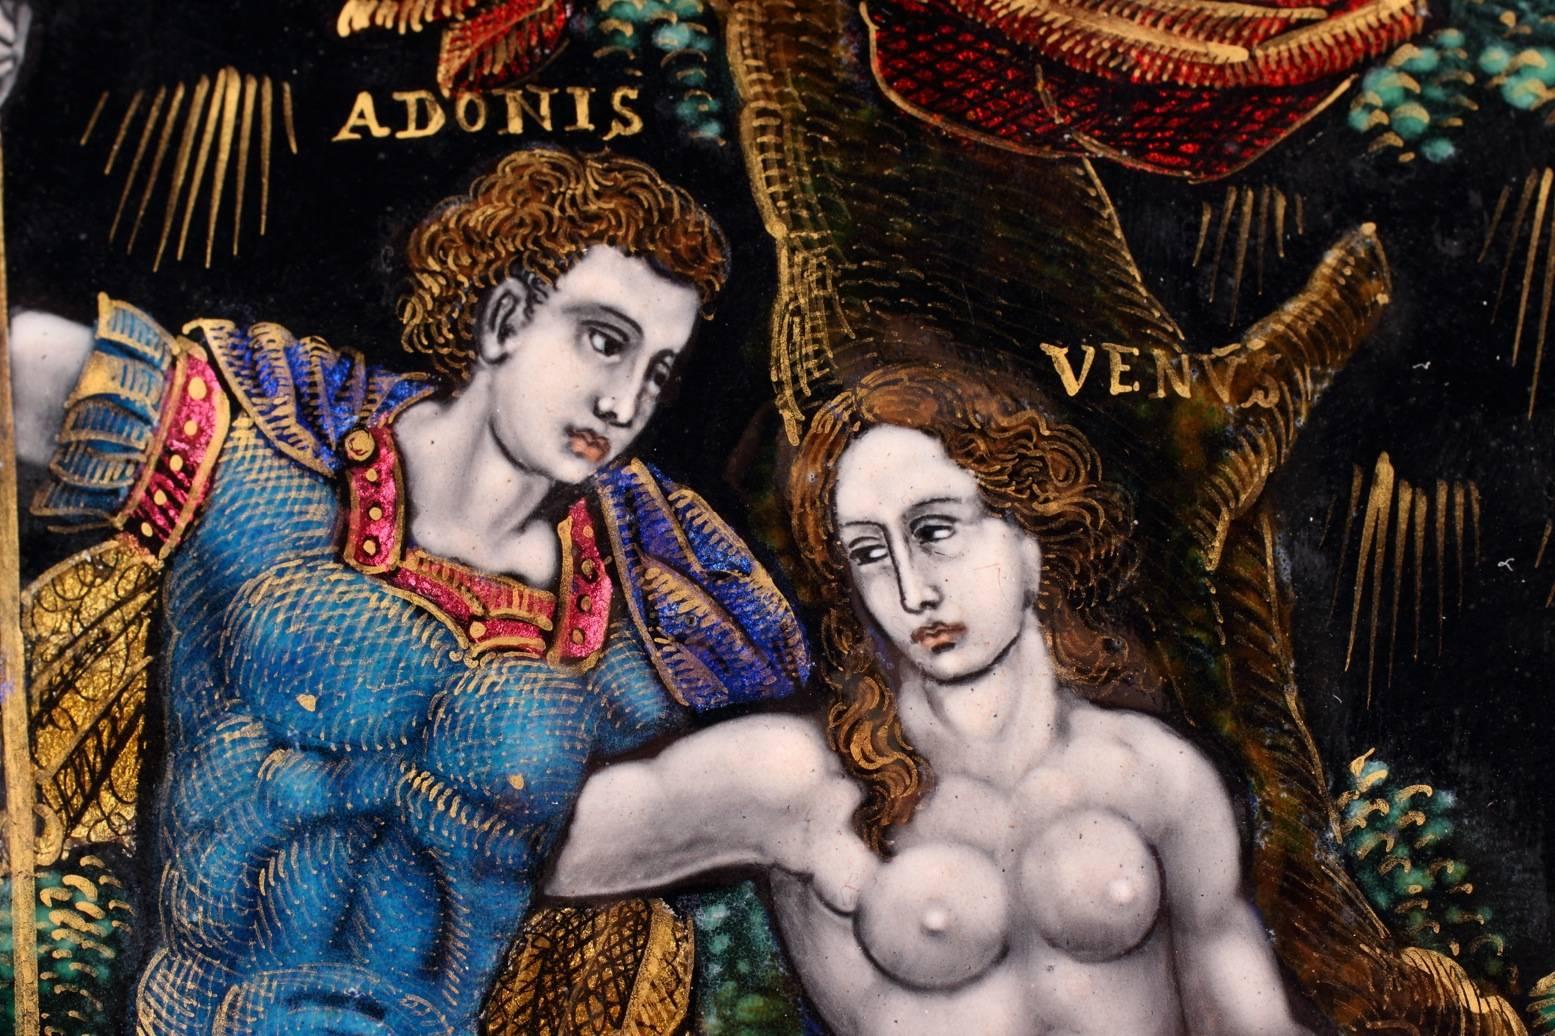 Four Samson Enamel Plates with Mythological Scenes in Renaissance Taste 5